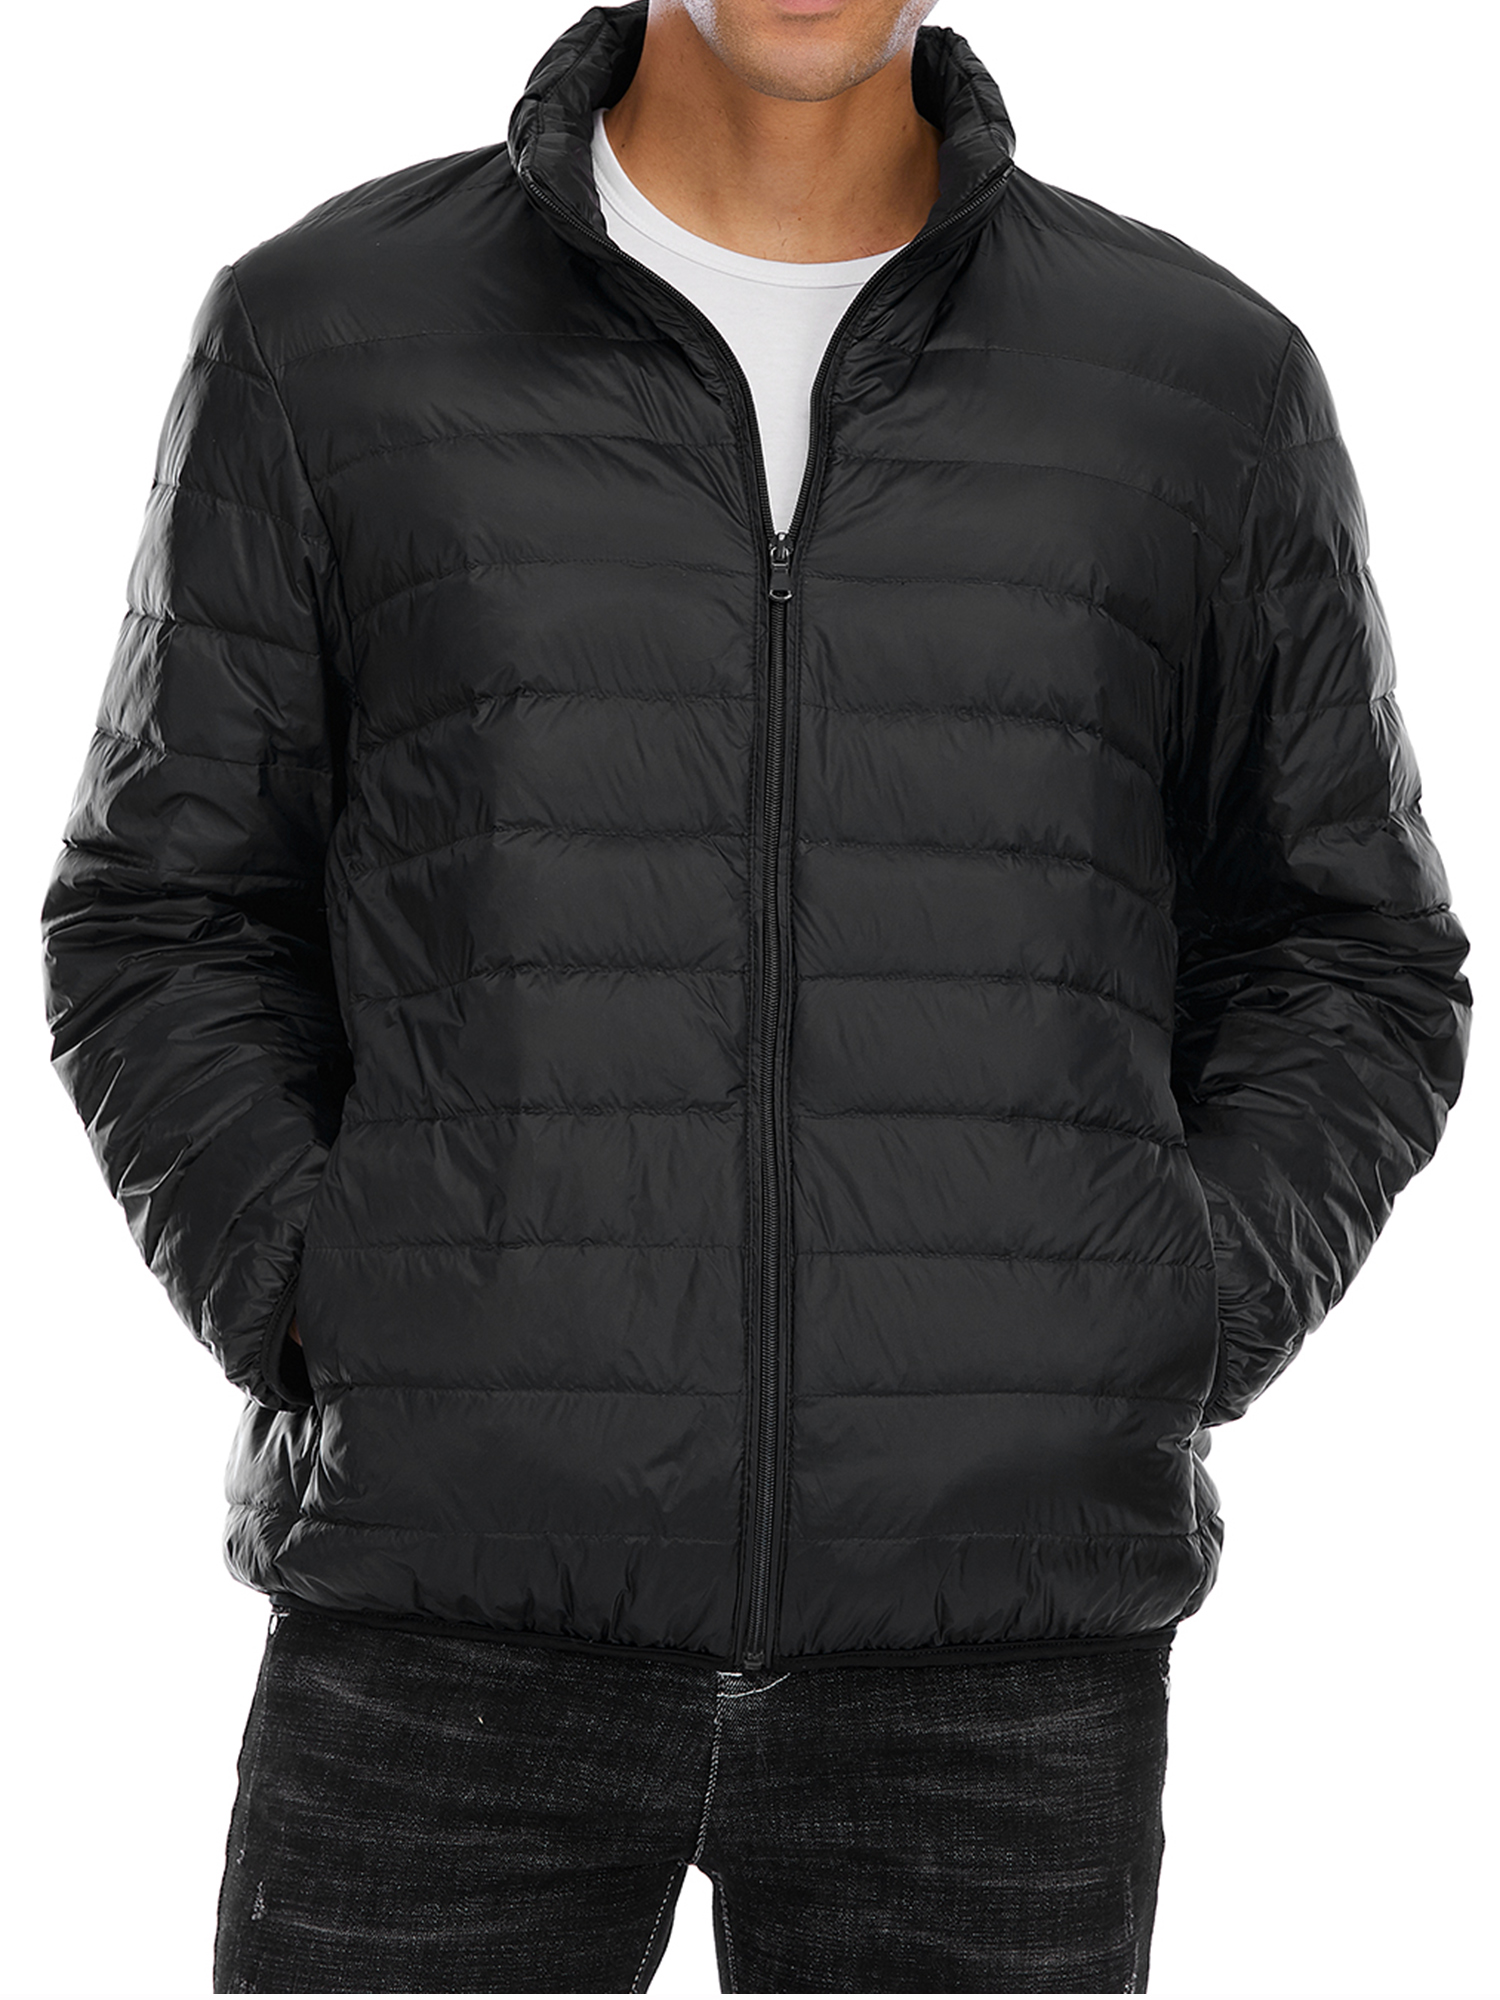 FOCUSSEXY Men Down Jacket Outwear Winter Outerwear Zip Up Windbreaker Lightweight Winter Jackets Casual Zip Up Puffer Coats Packable Puffer Jacket, Black - image 5 of 7